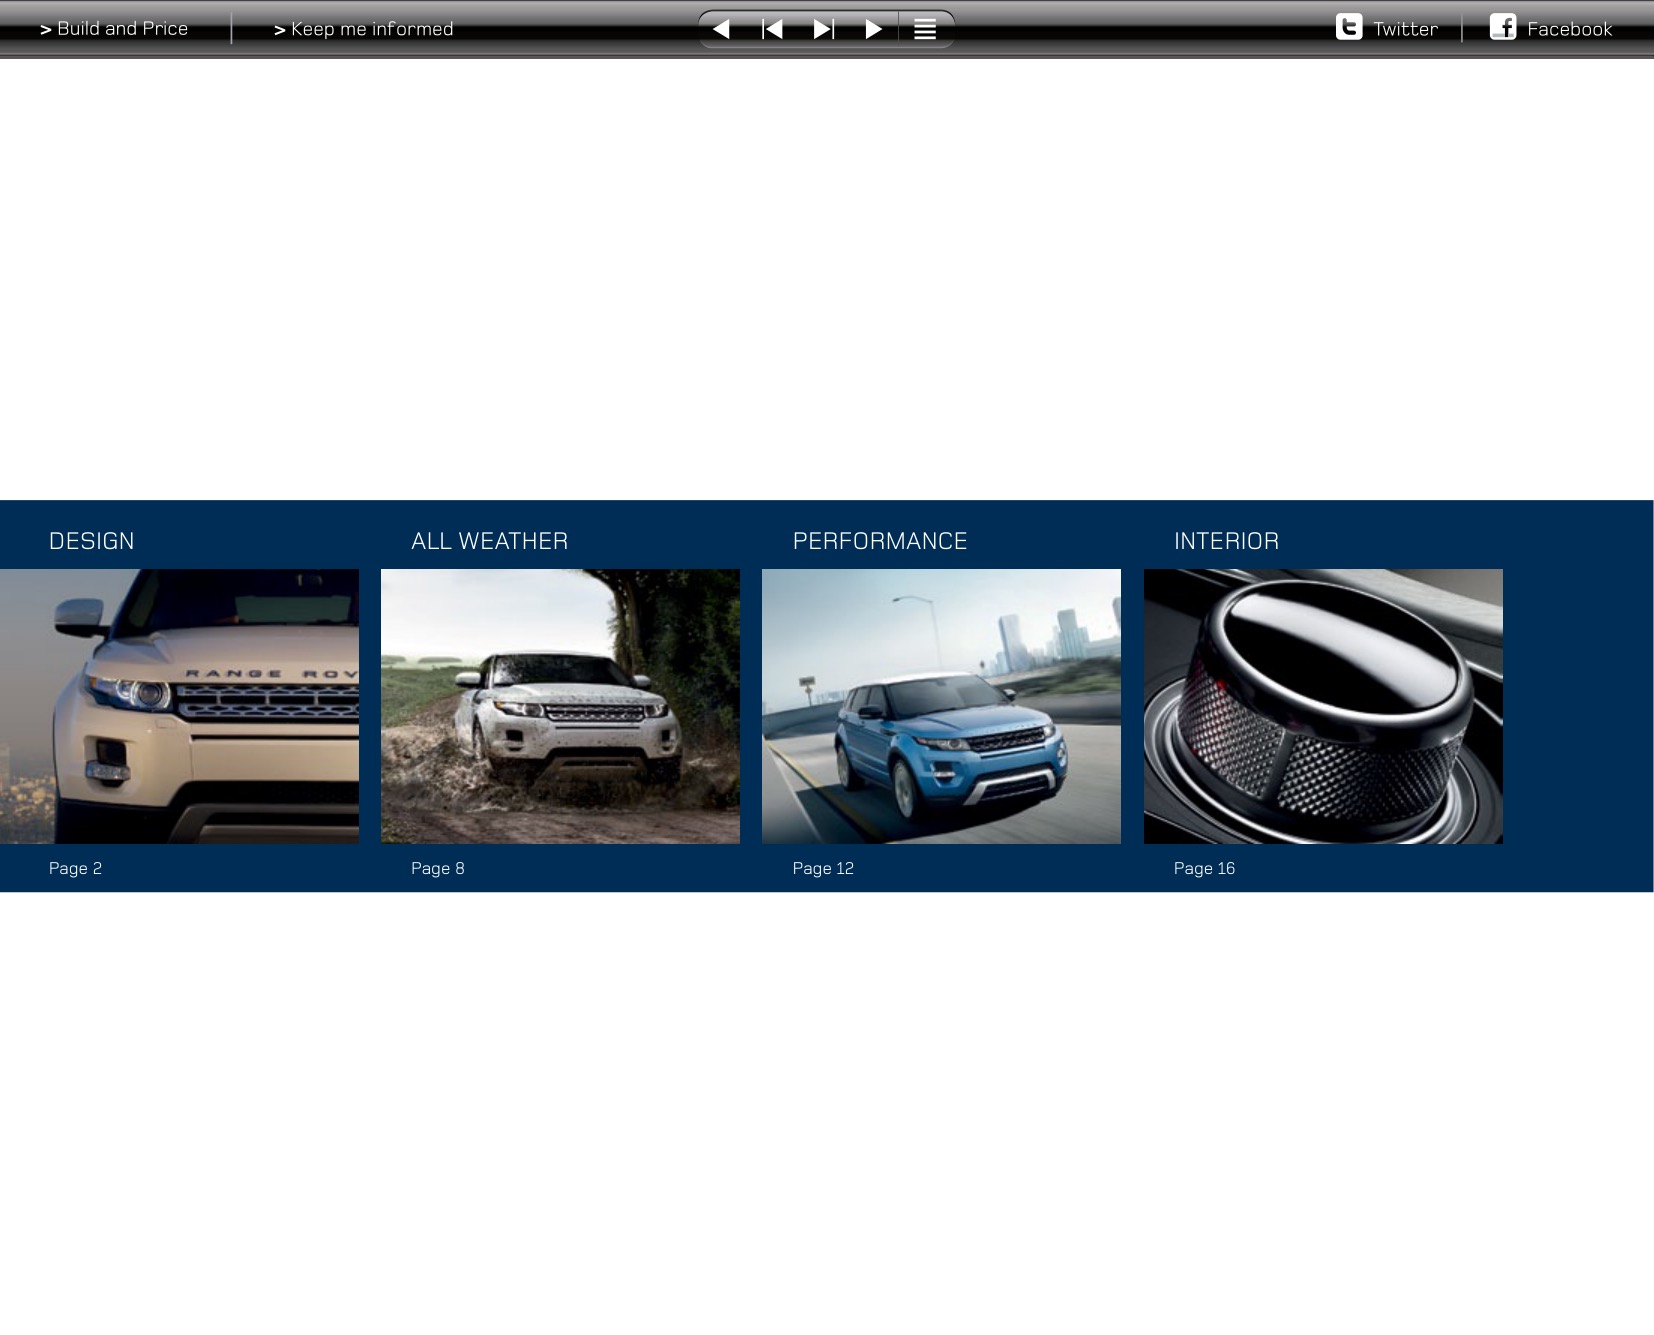 2013 Land Rover Evoque Brochure Page 35